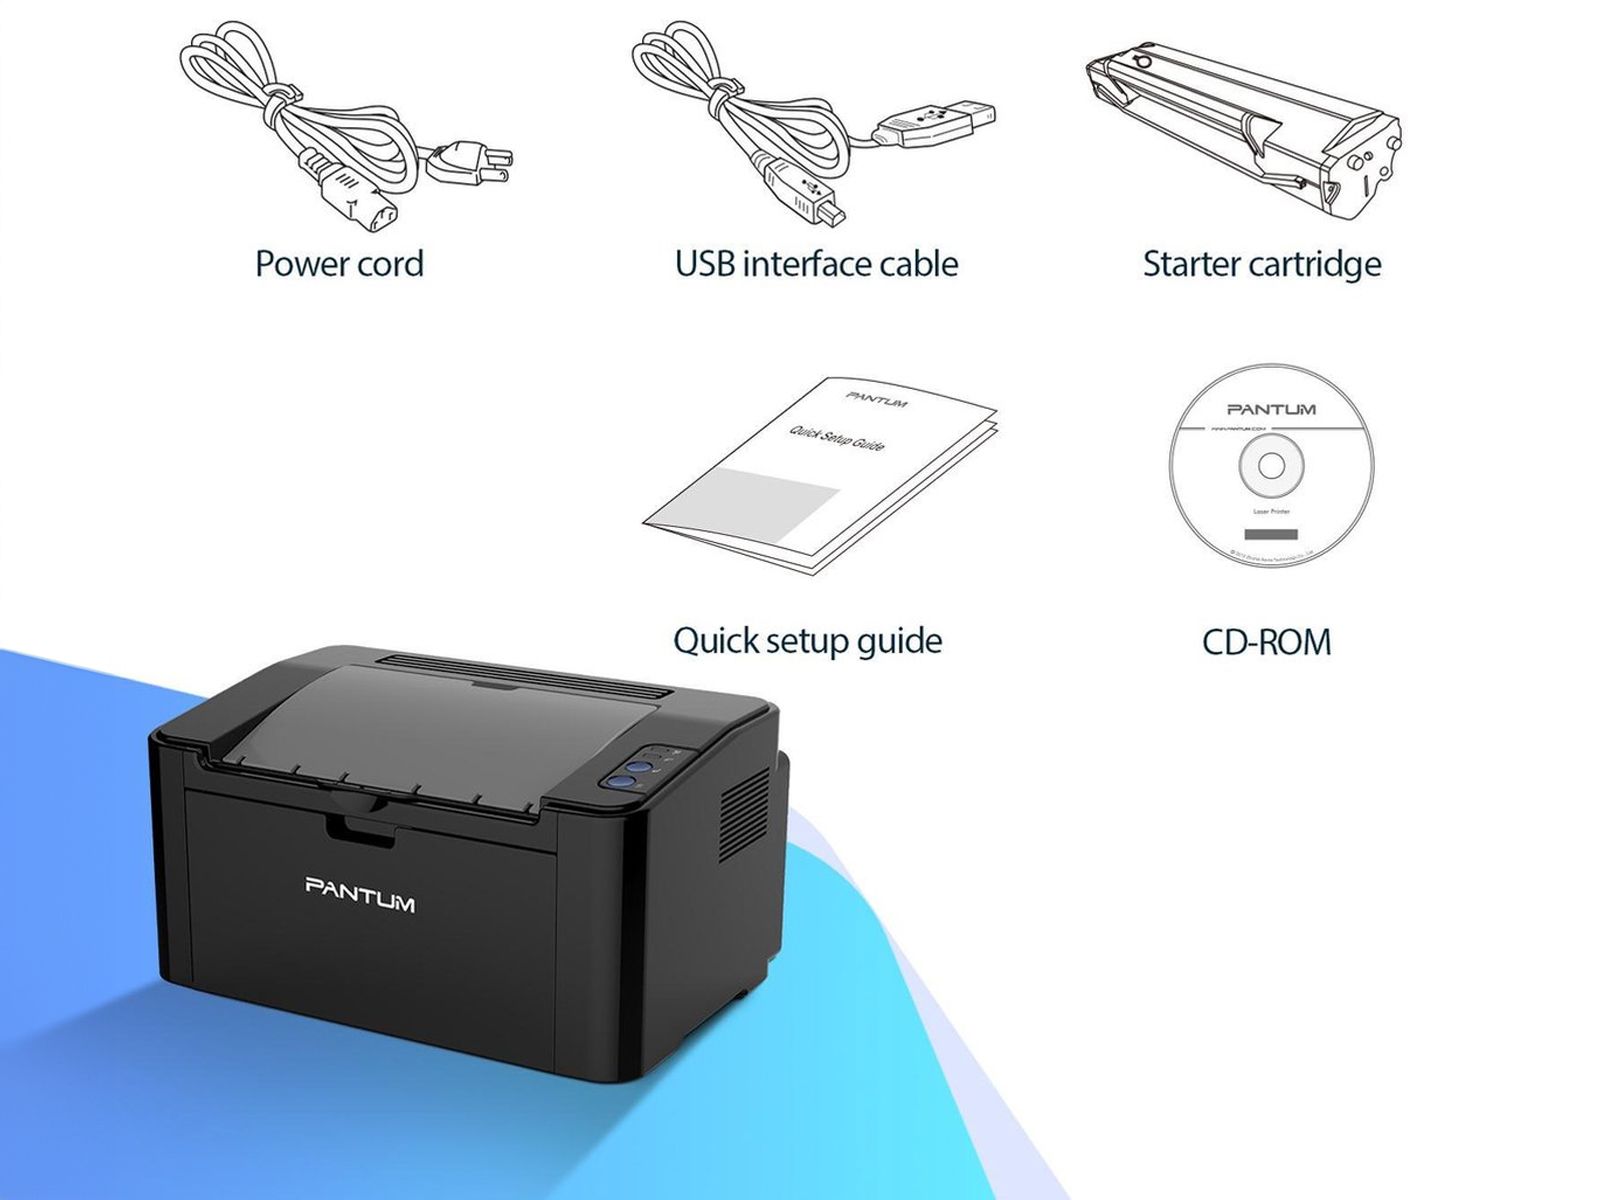 pantum-p2500w-laserprinter-met-wifi